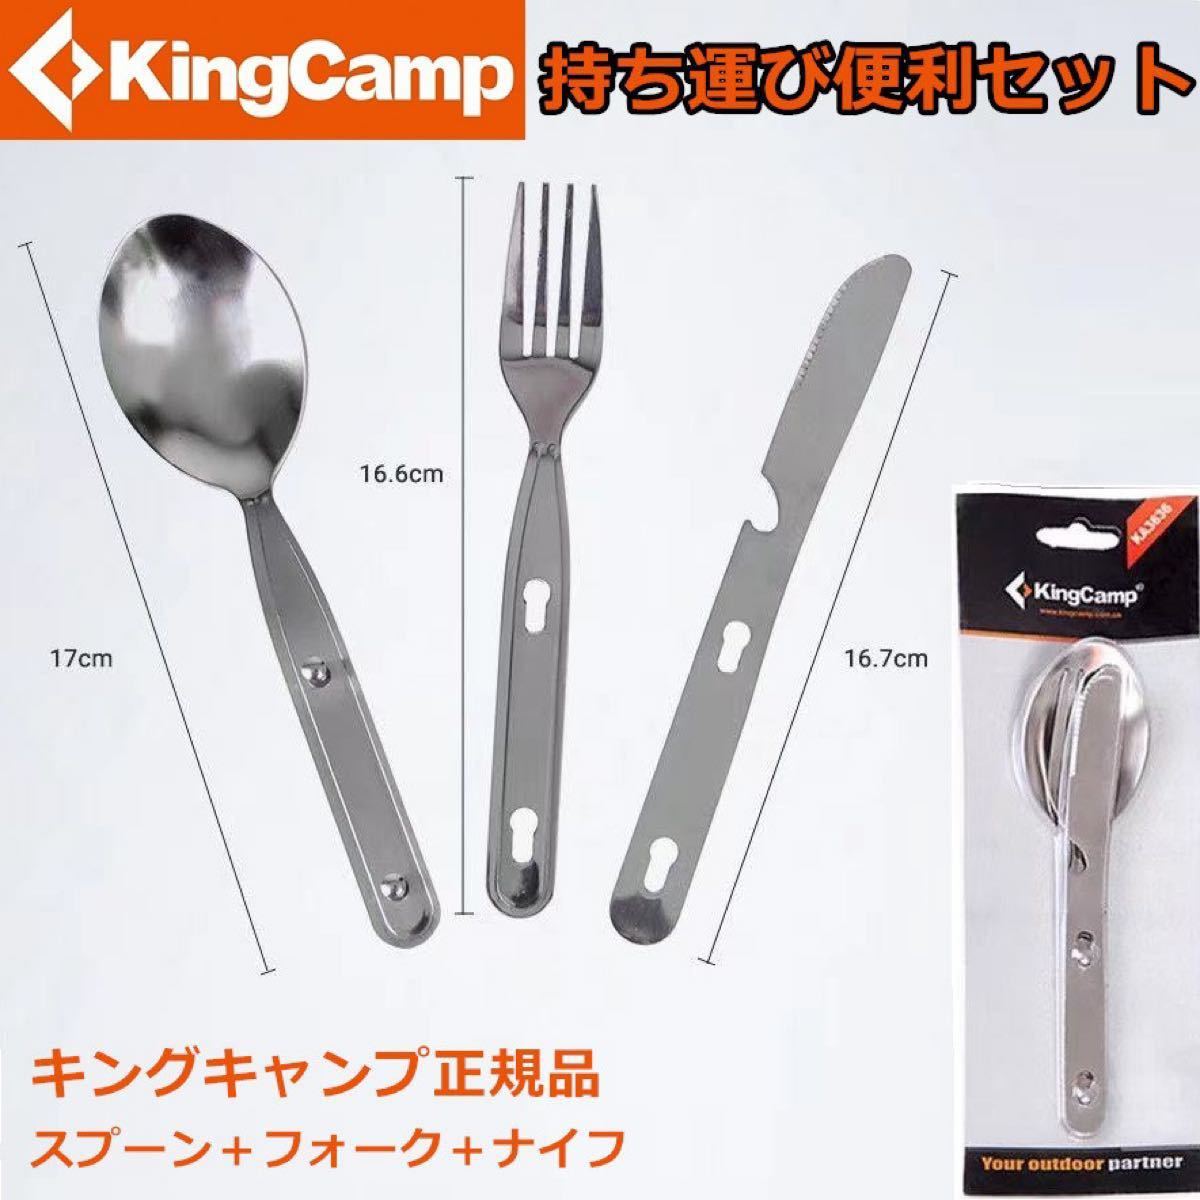 KINGCAMP正規品-スプーンフォークナイフ3セット-丈夫便利-持ち運び-多用